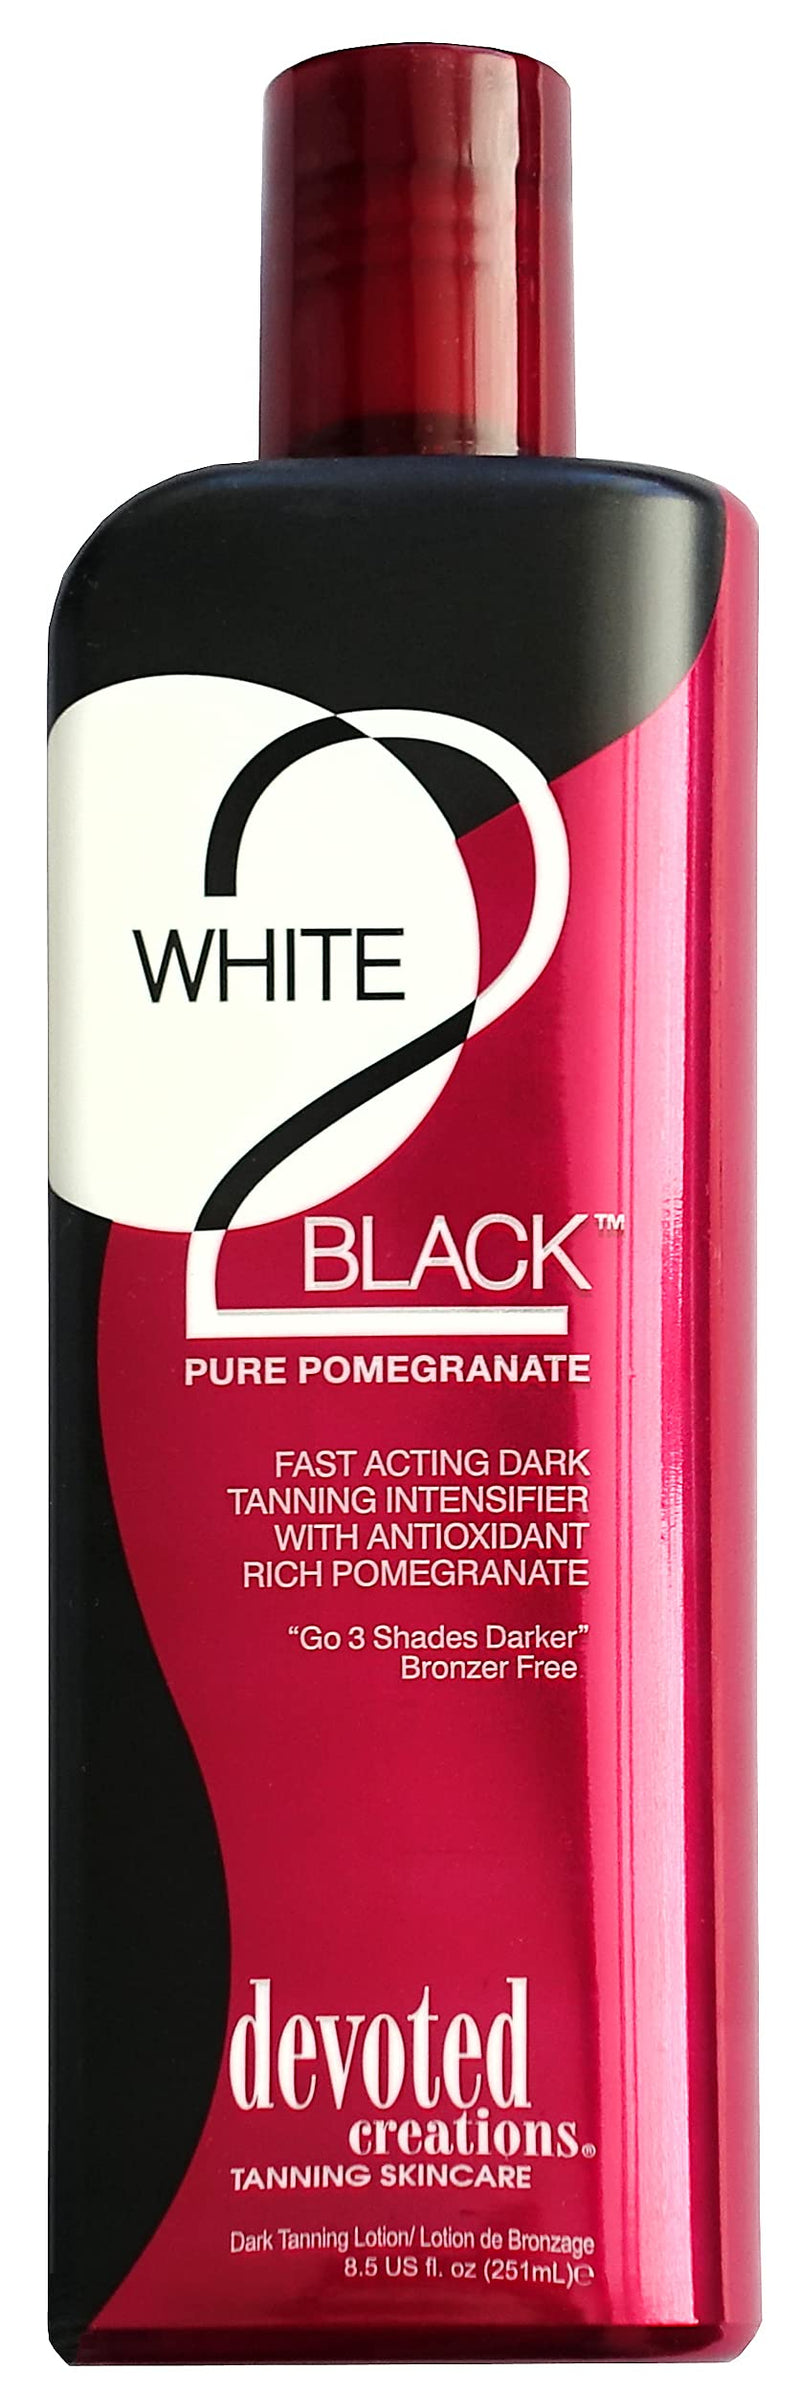 Devoted Creations White 2 Black Pure Pomegranate sunbed tanning lotion cream (250ml bottle) - NewNest Australia